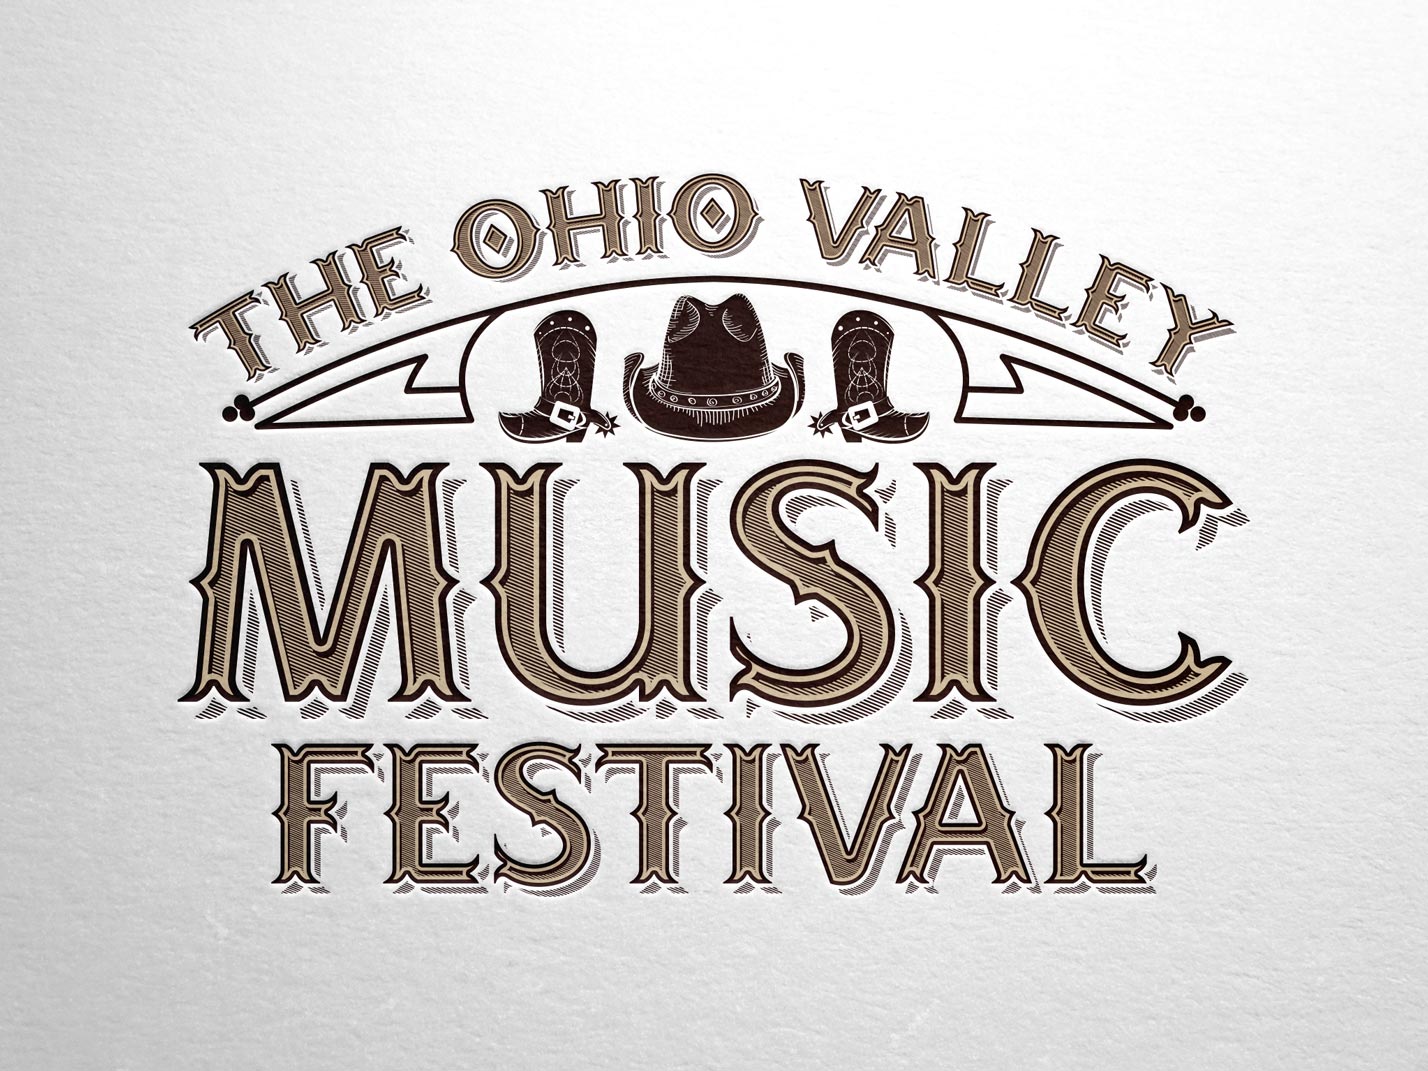 The Ohio Valley Music Festival Branding